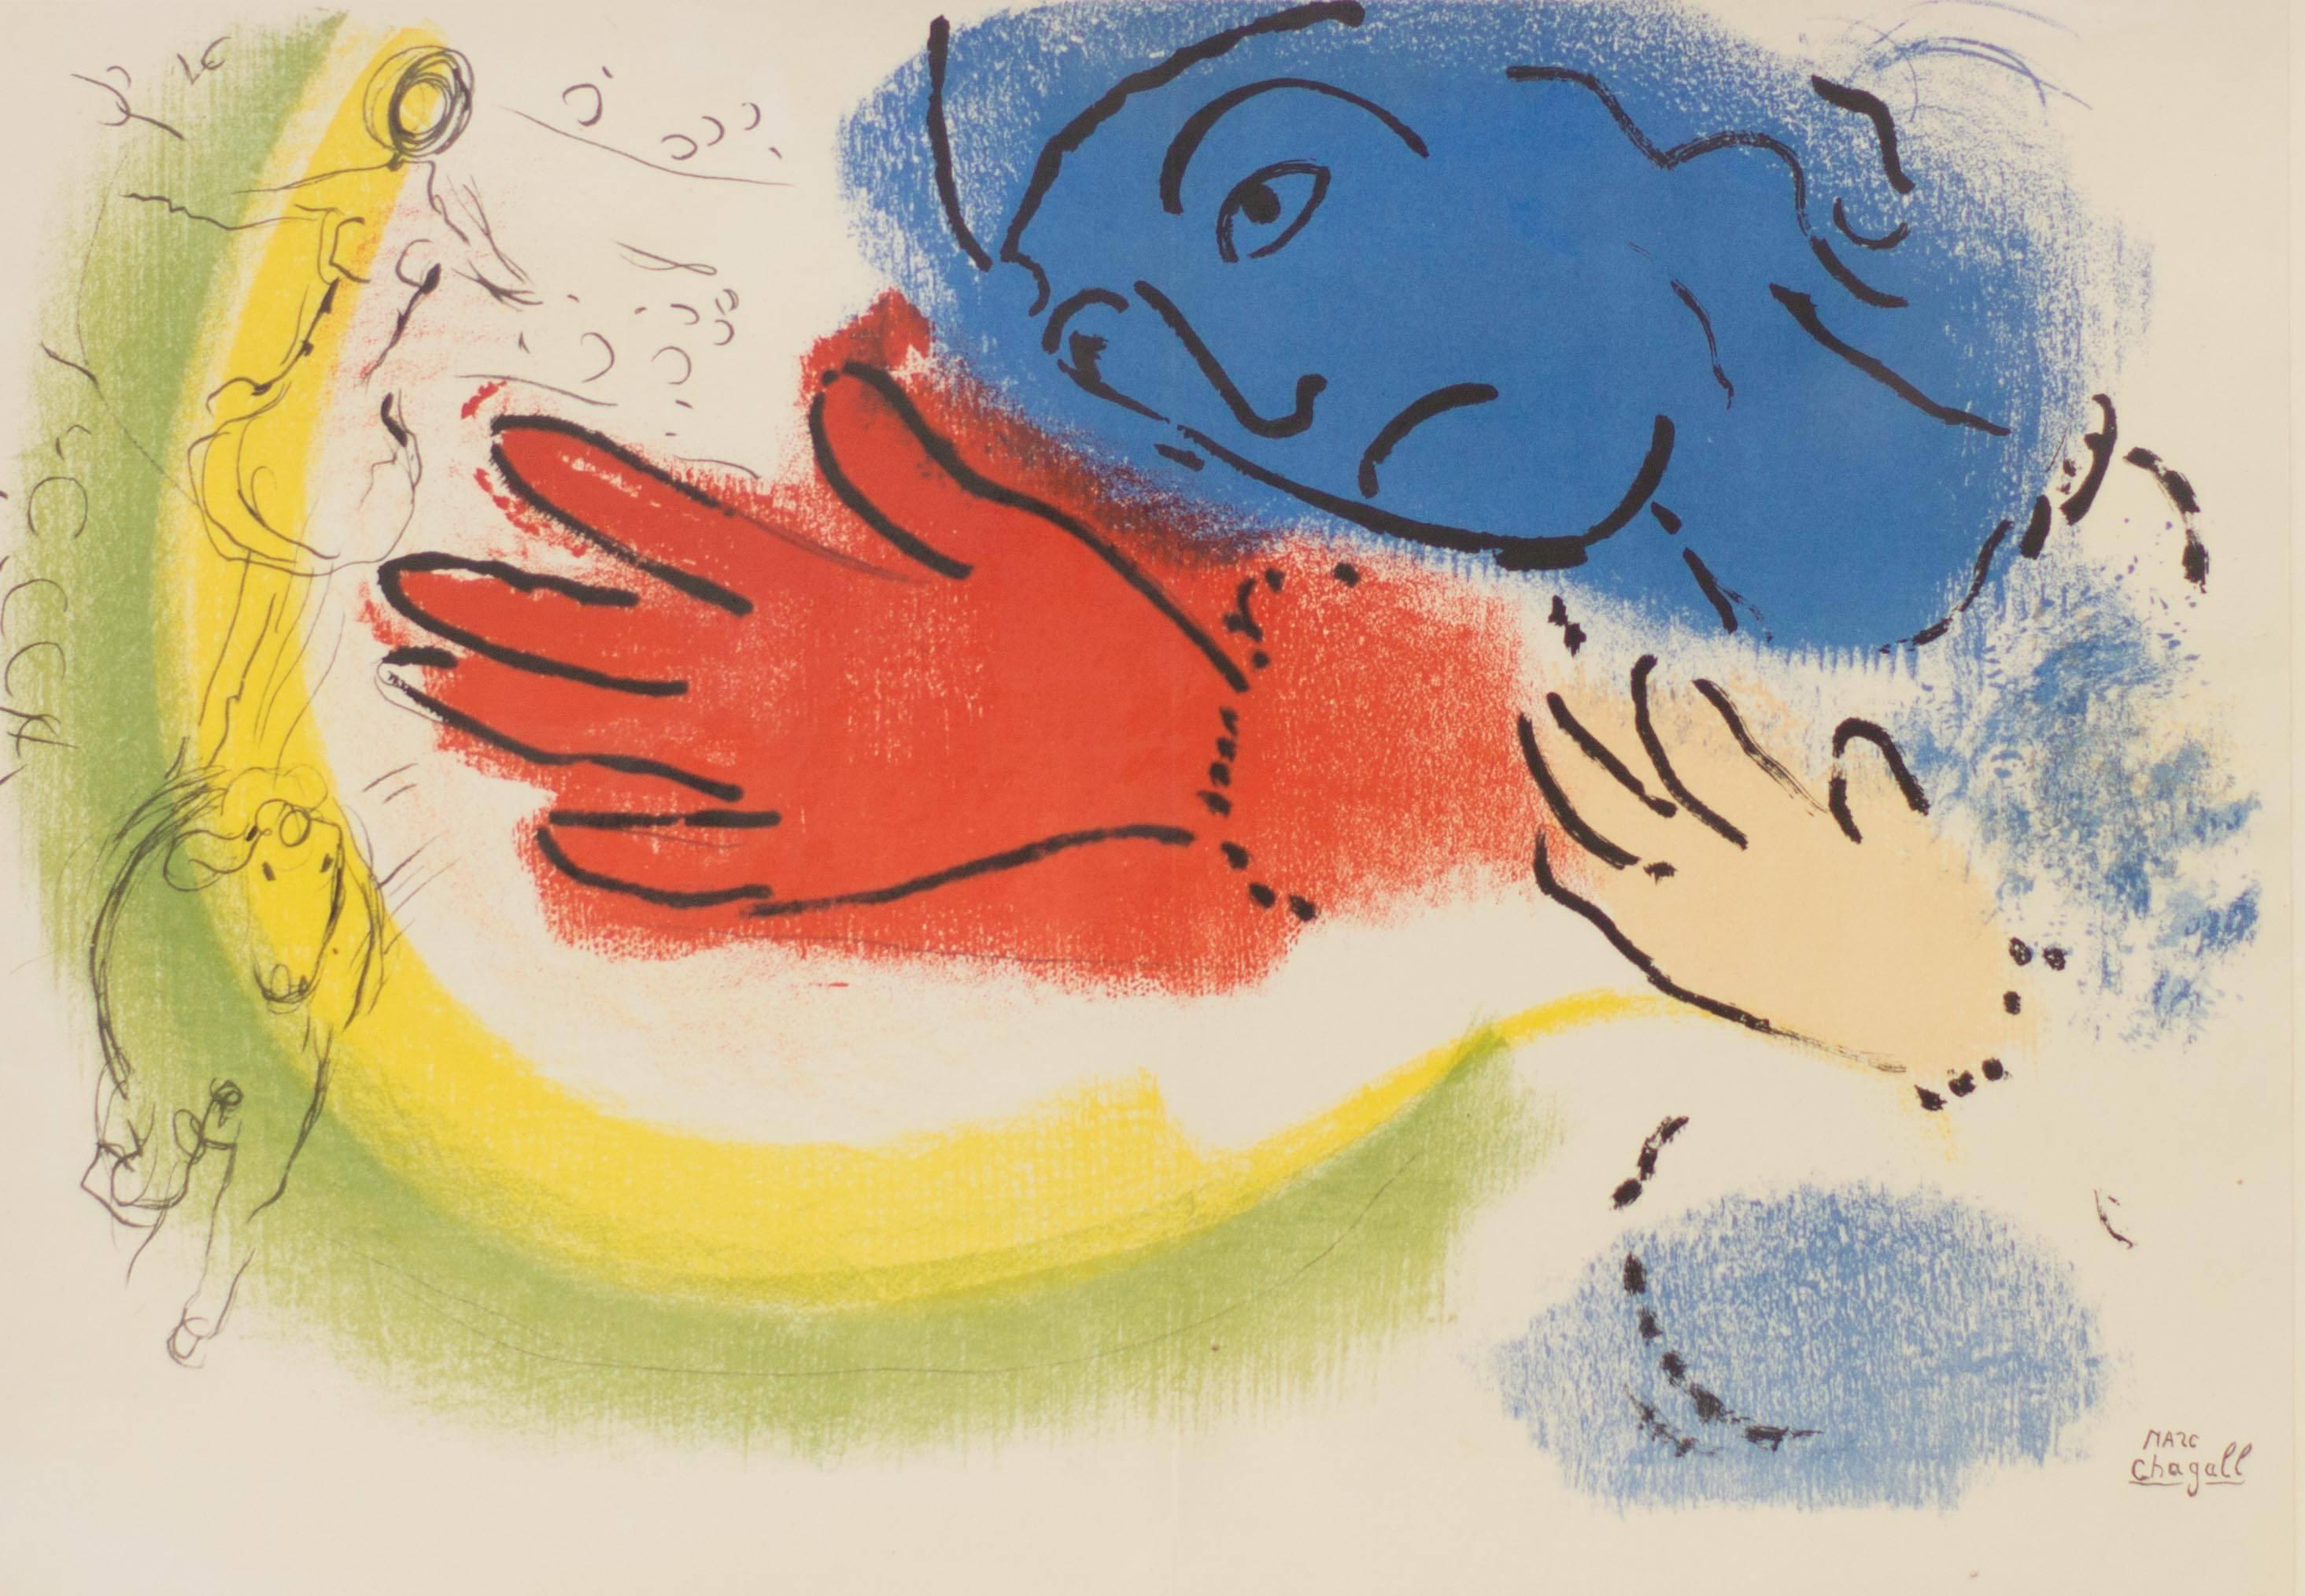 Ecuyere de Cirque - Print by Marc Chagall